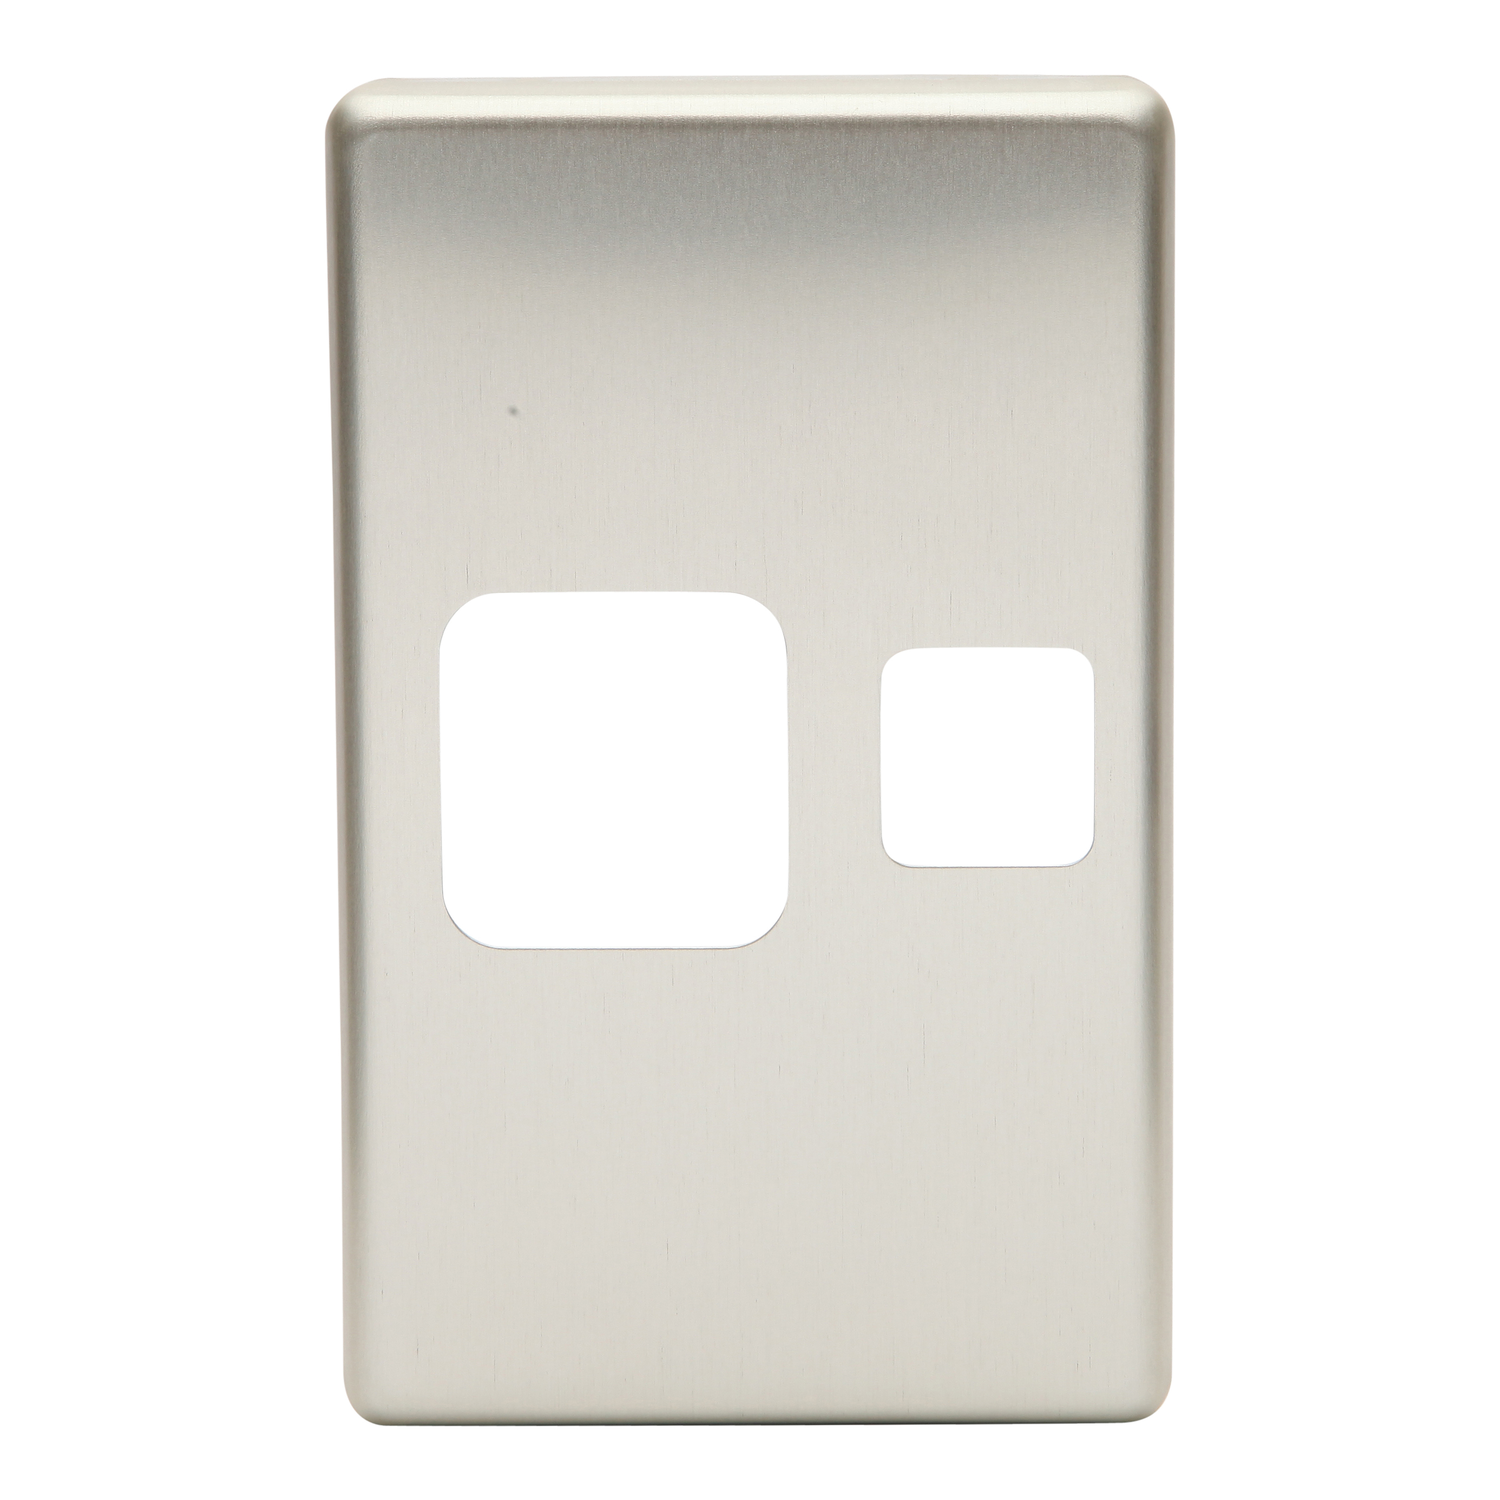 Clip-On Socket Cover Plate - 600 Series - 1 gang - aluminium